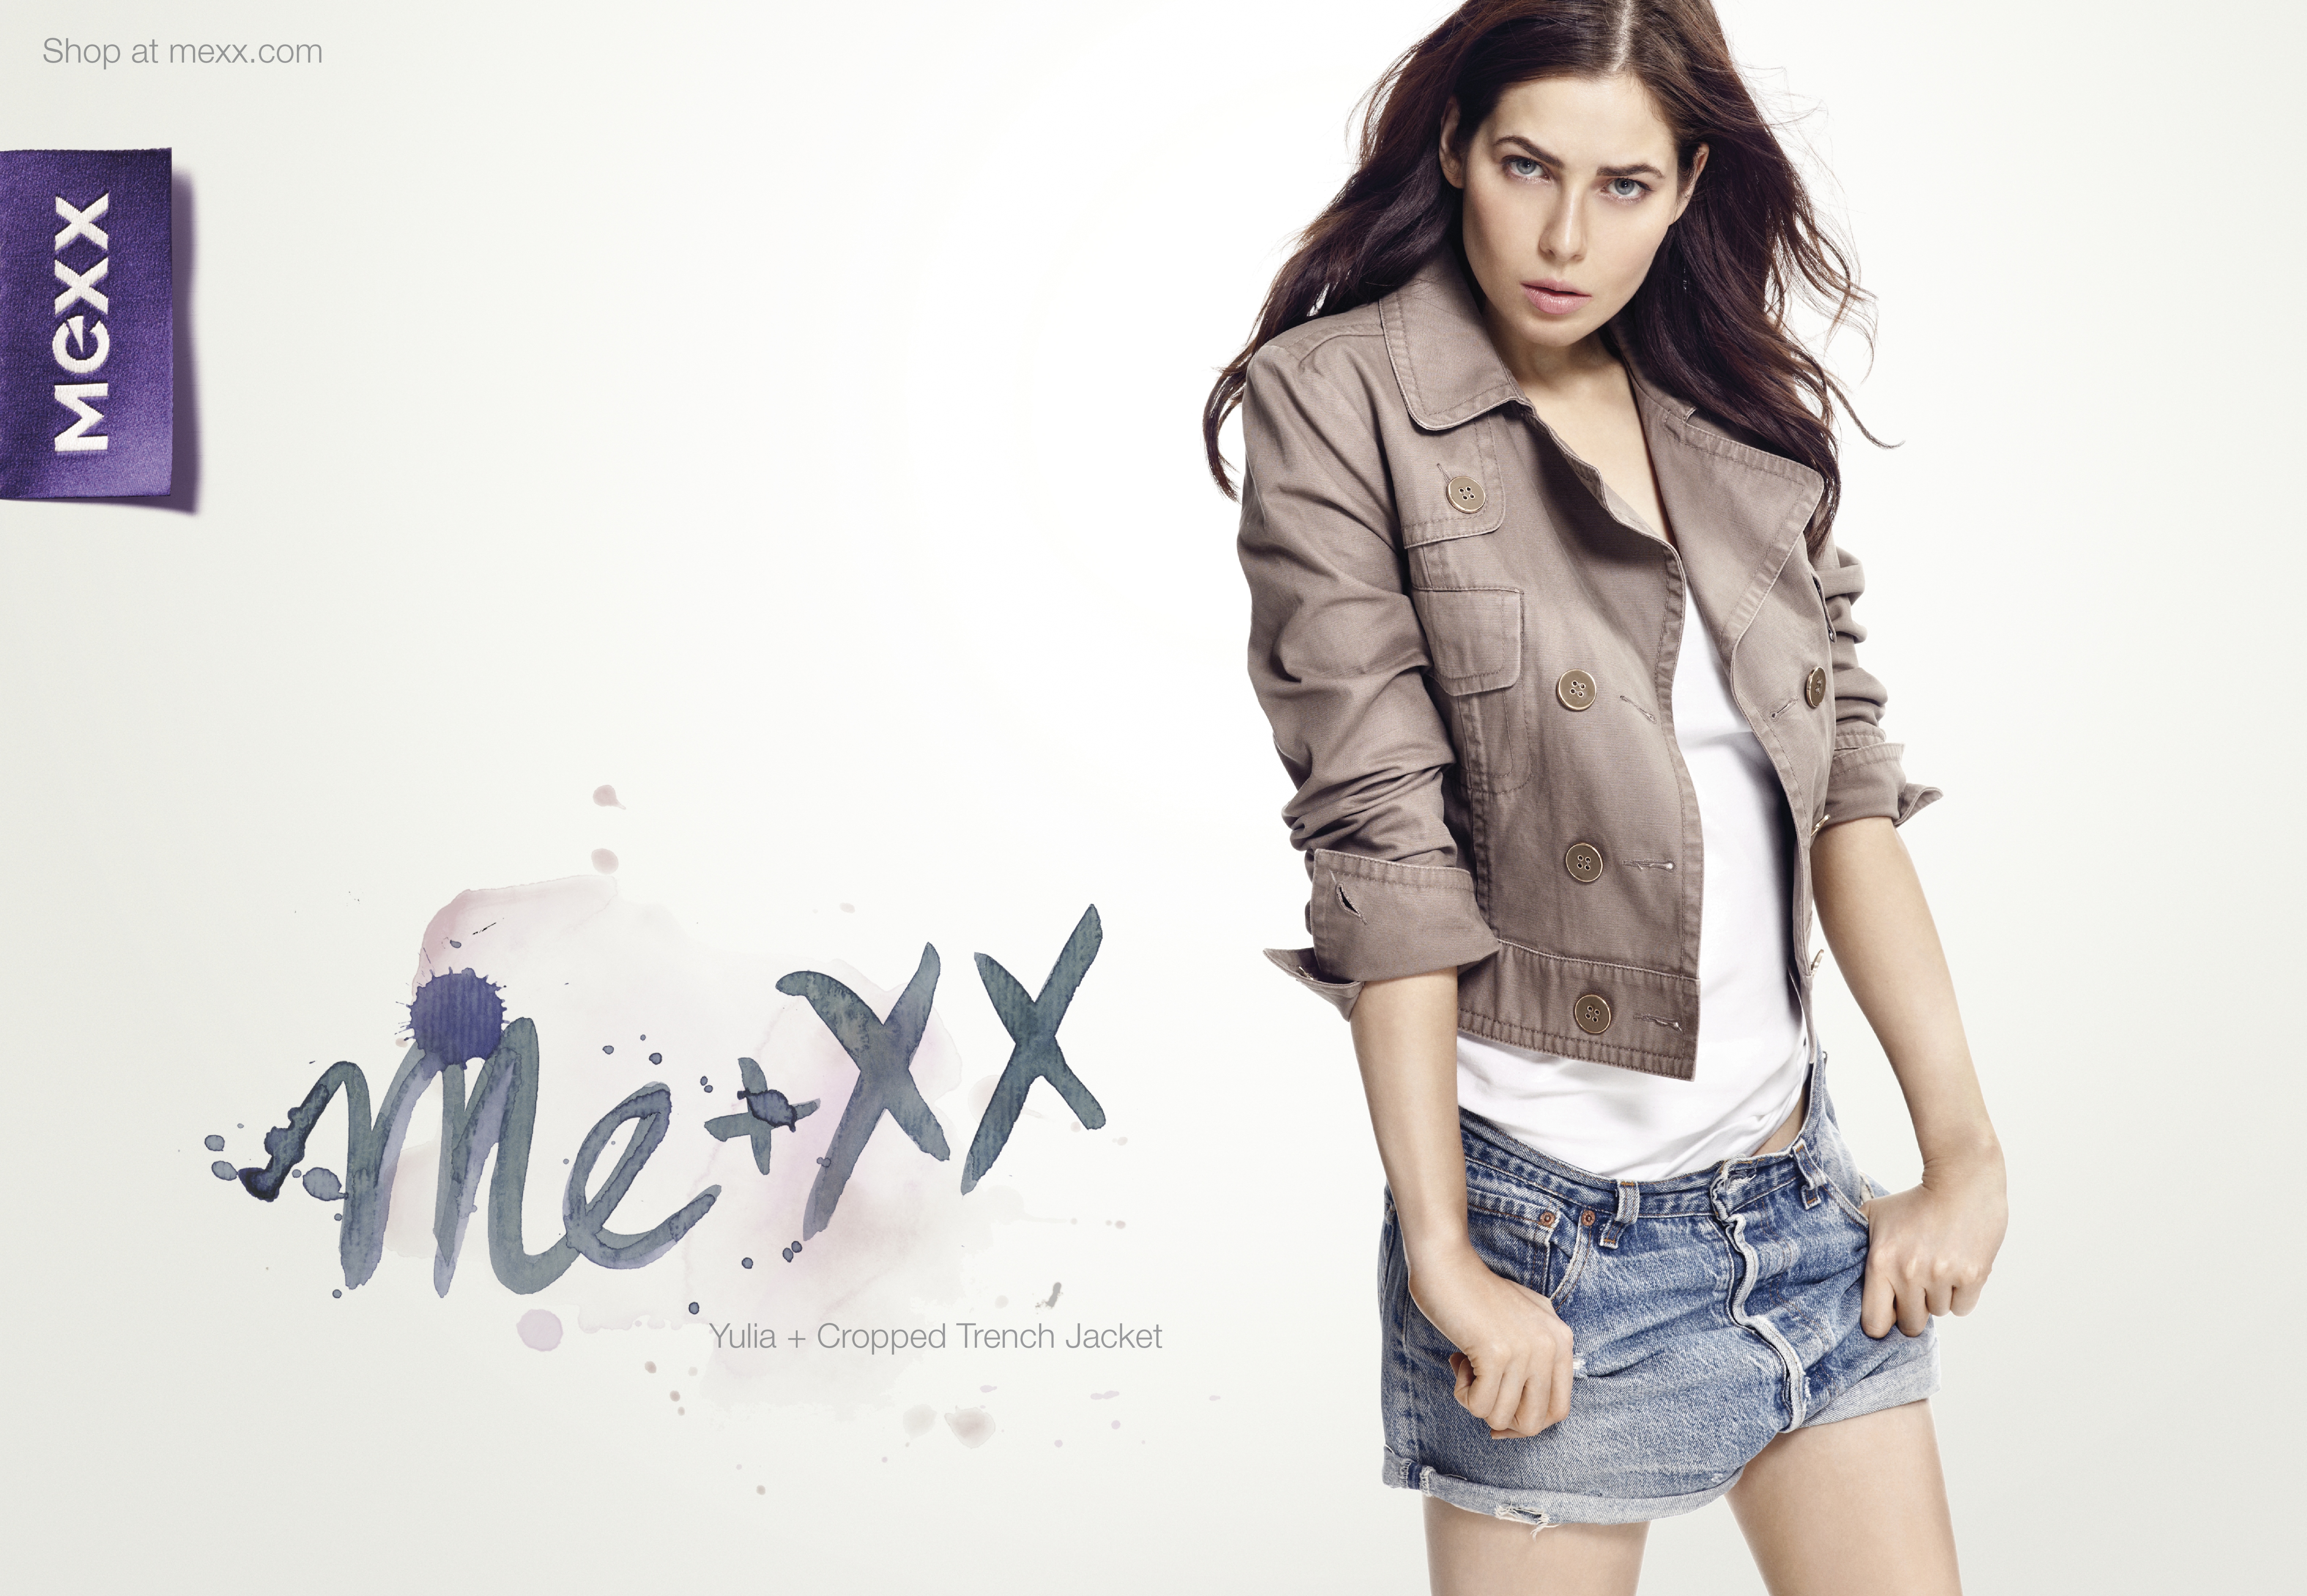 Mexx Me XX SS 2011 Campaign 2